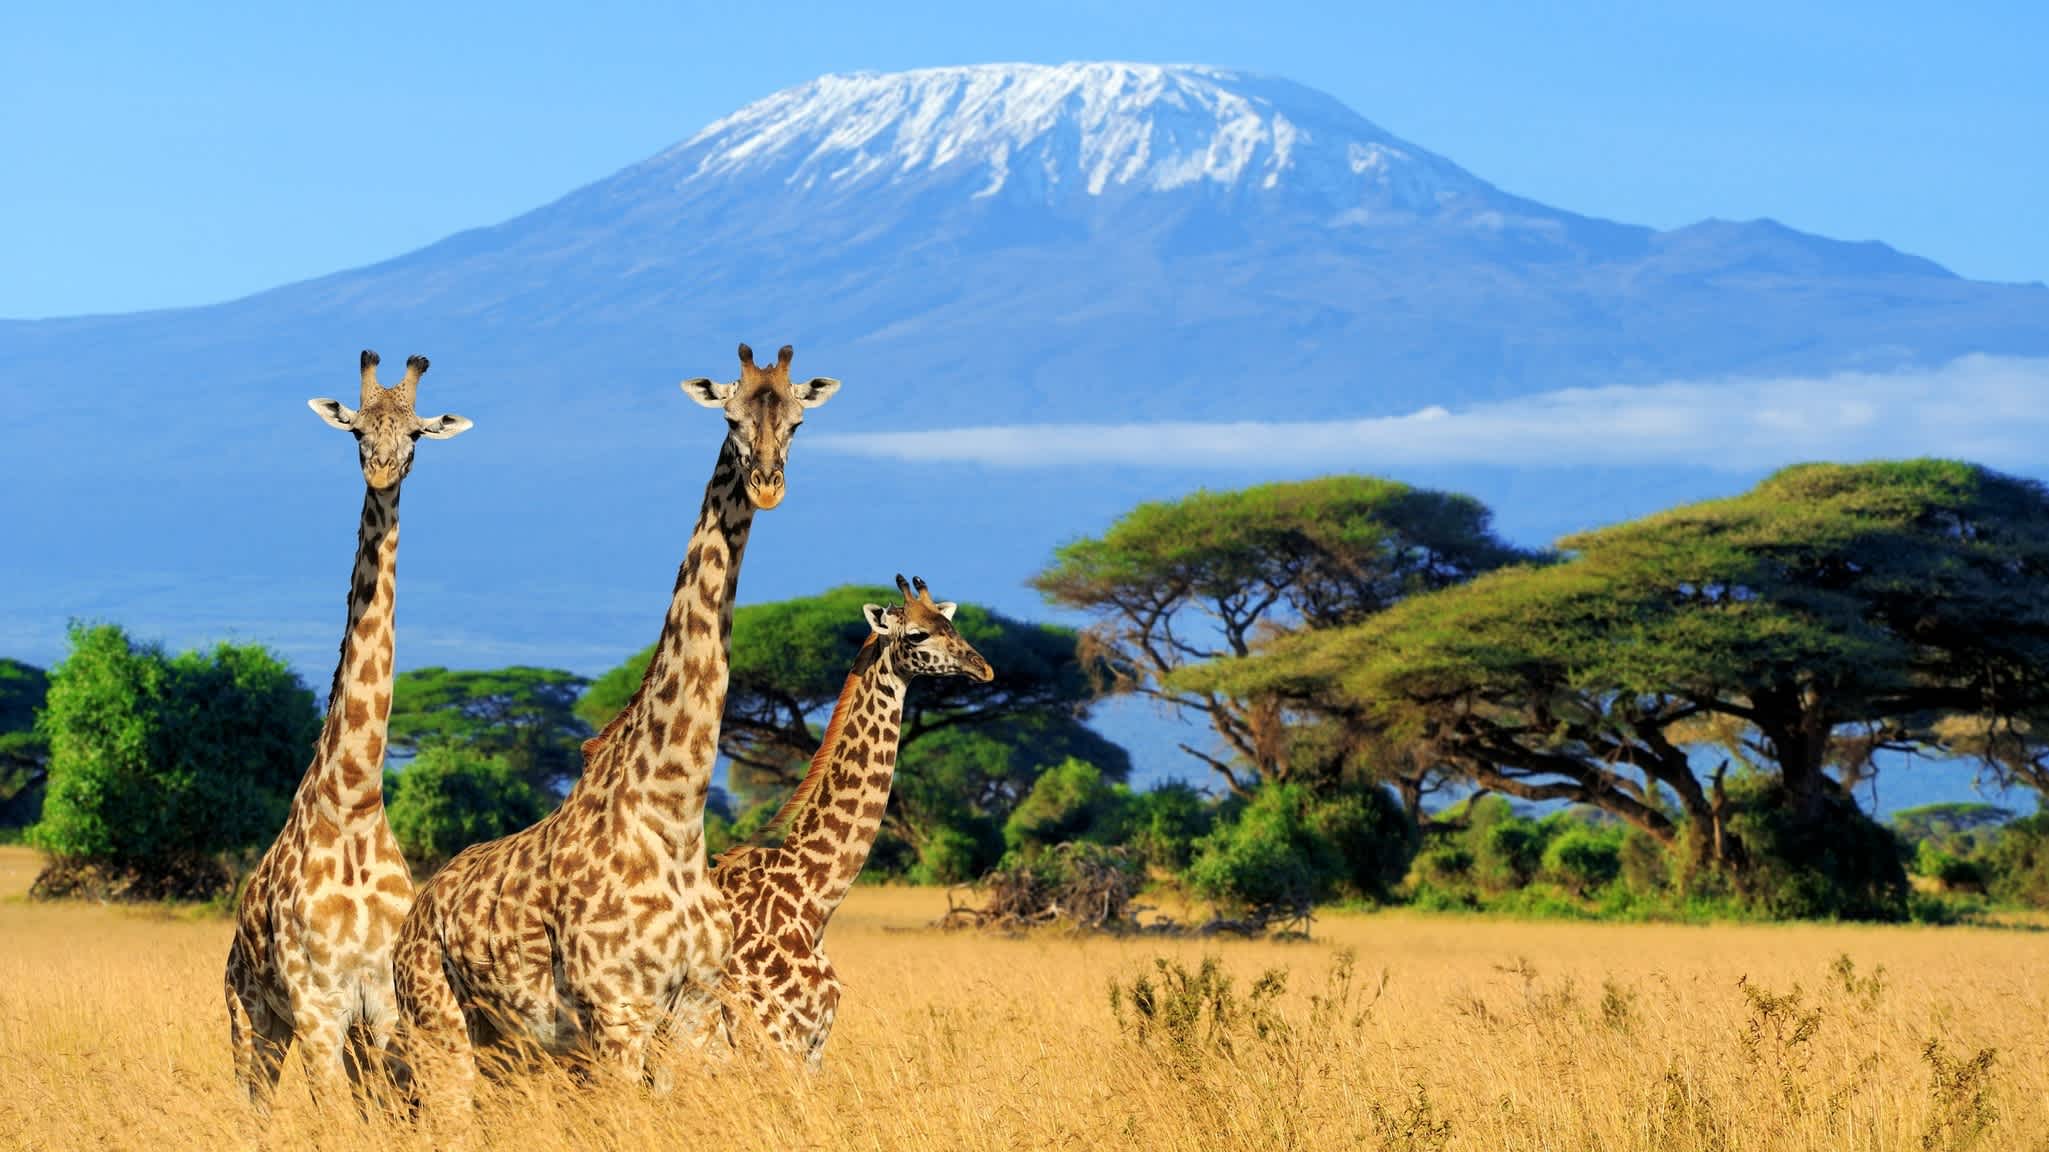 Le Kilimandjaro avec des girafes au premier plan